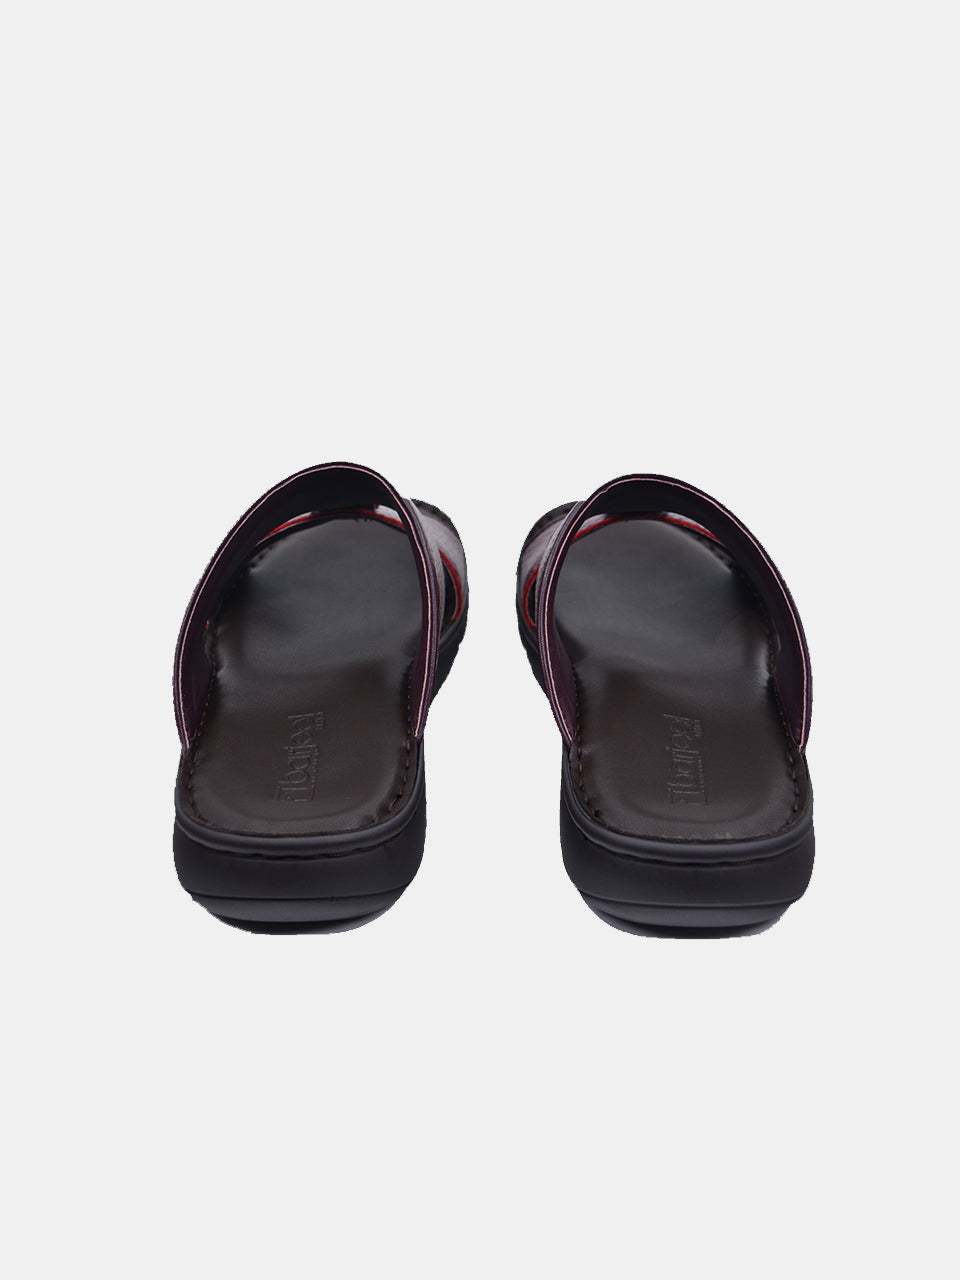 Barjeel Uno 29550-1 Men's Arabic Sandals #color_Red